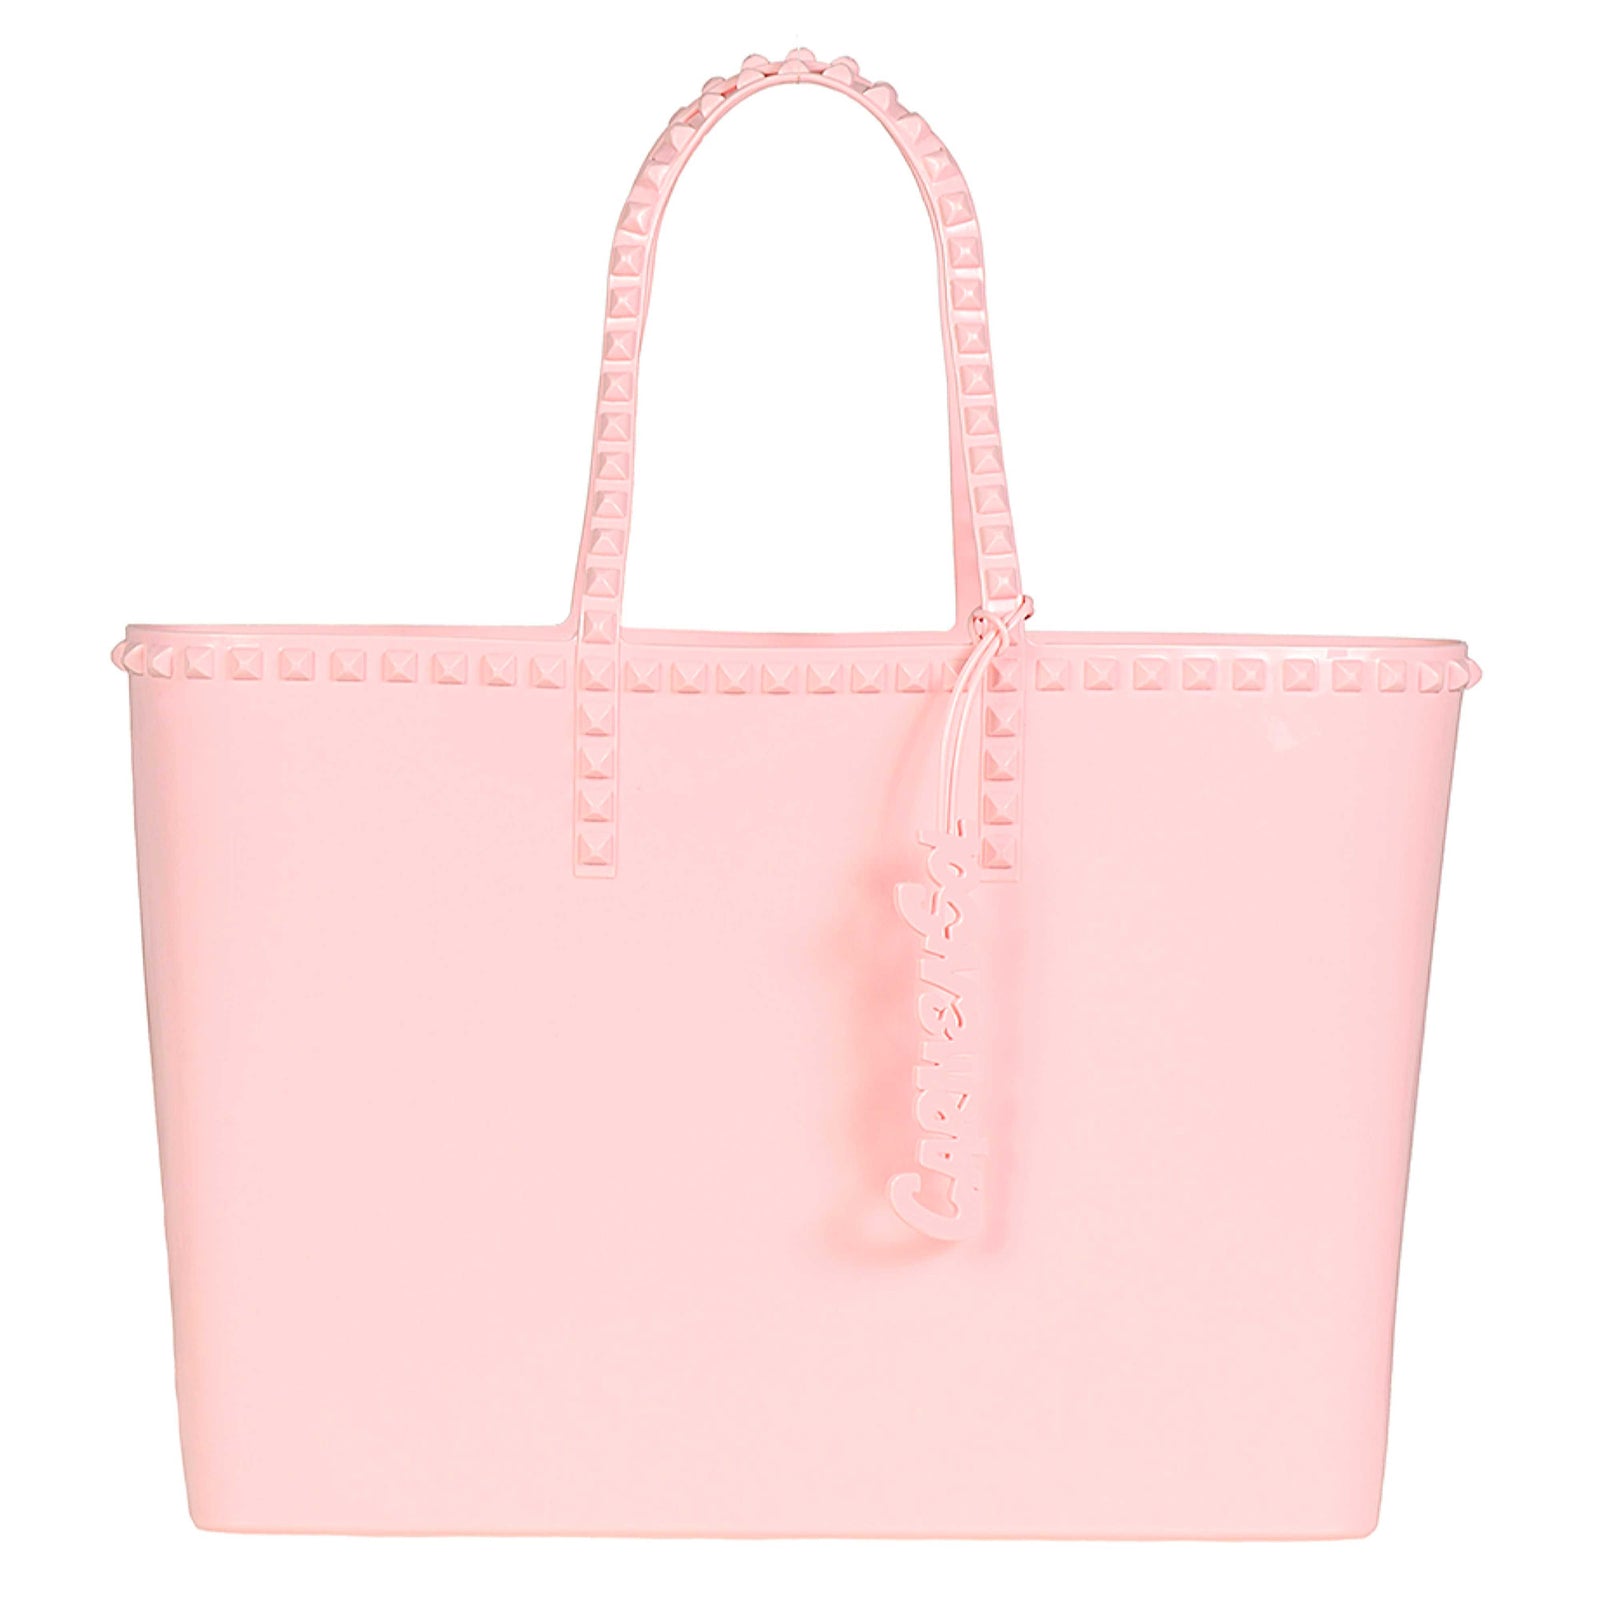 Beach tote bag bag in color baby pink